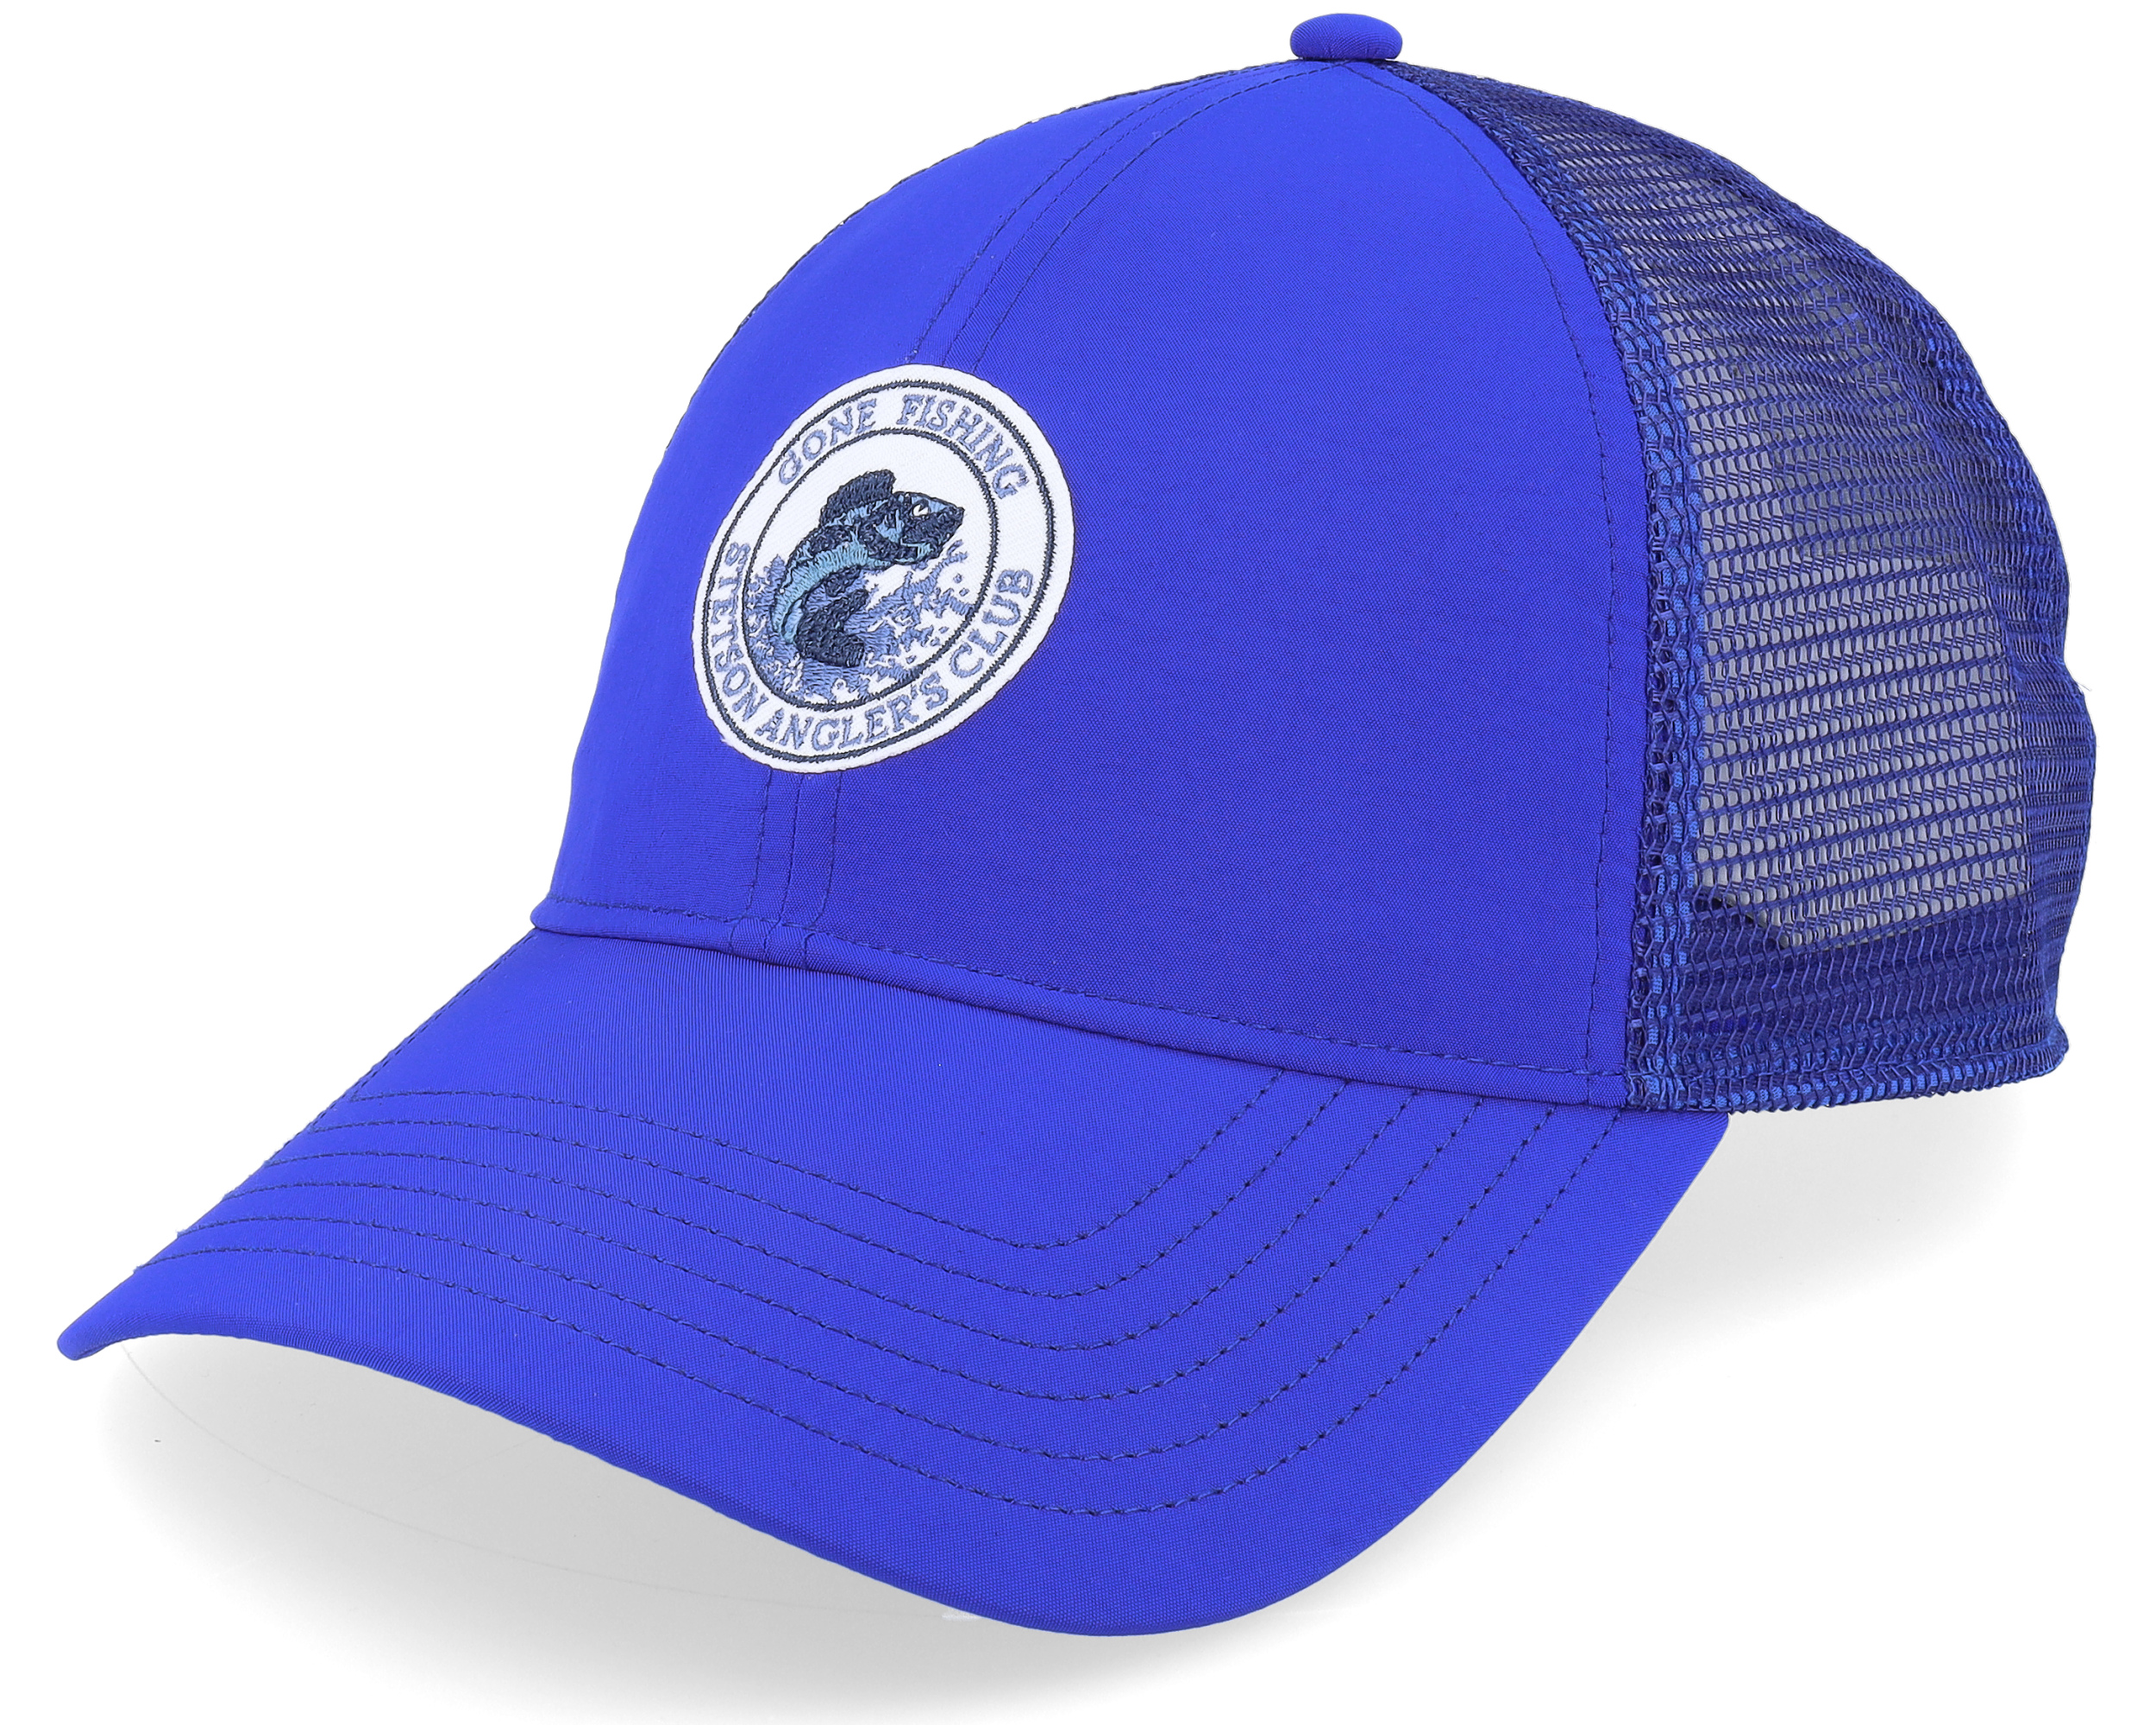 Baseball Cap Angling Club Royal Blue Trucker - Stetson cap